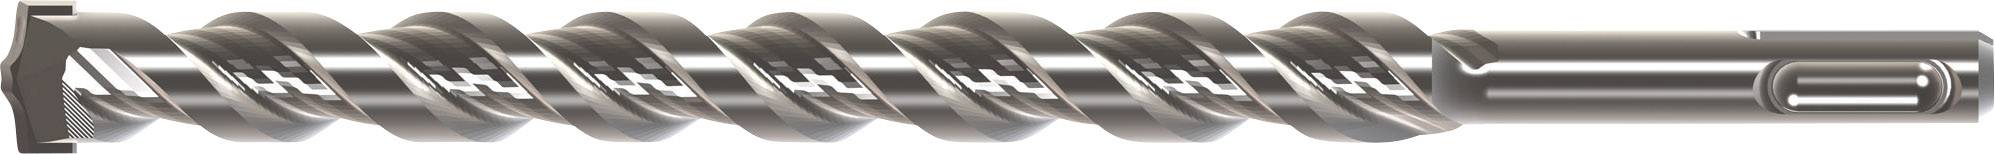 HELLER Hartmetall Hammerbohrer 18 mm Heller Bionic 186896 Gesamtlänge 300 mm SDS-Plus 1 St.